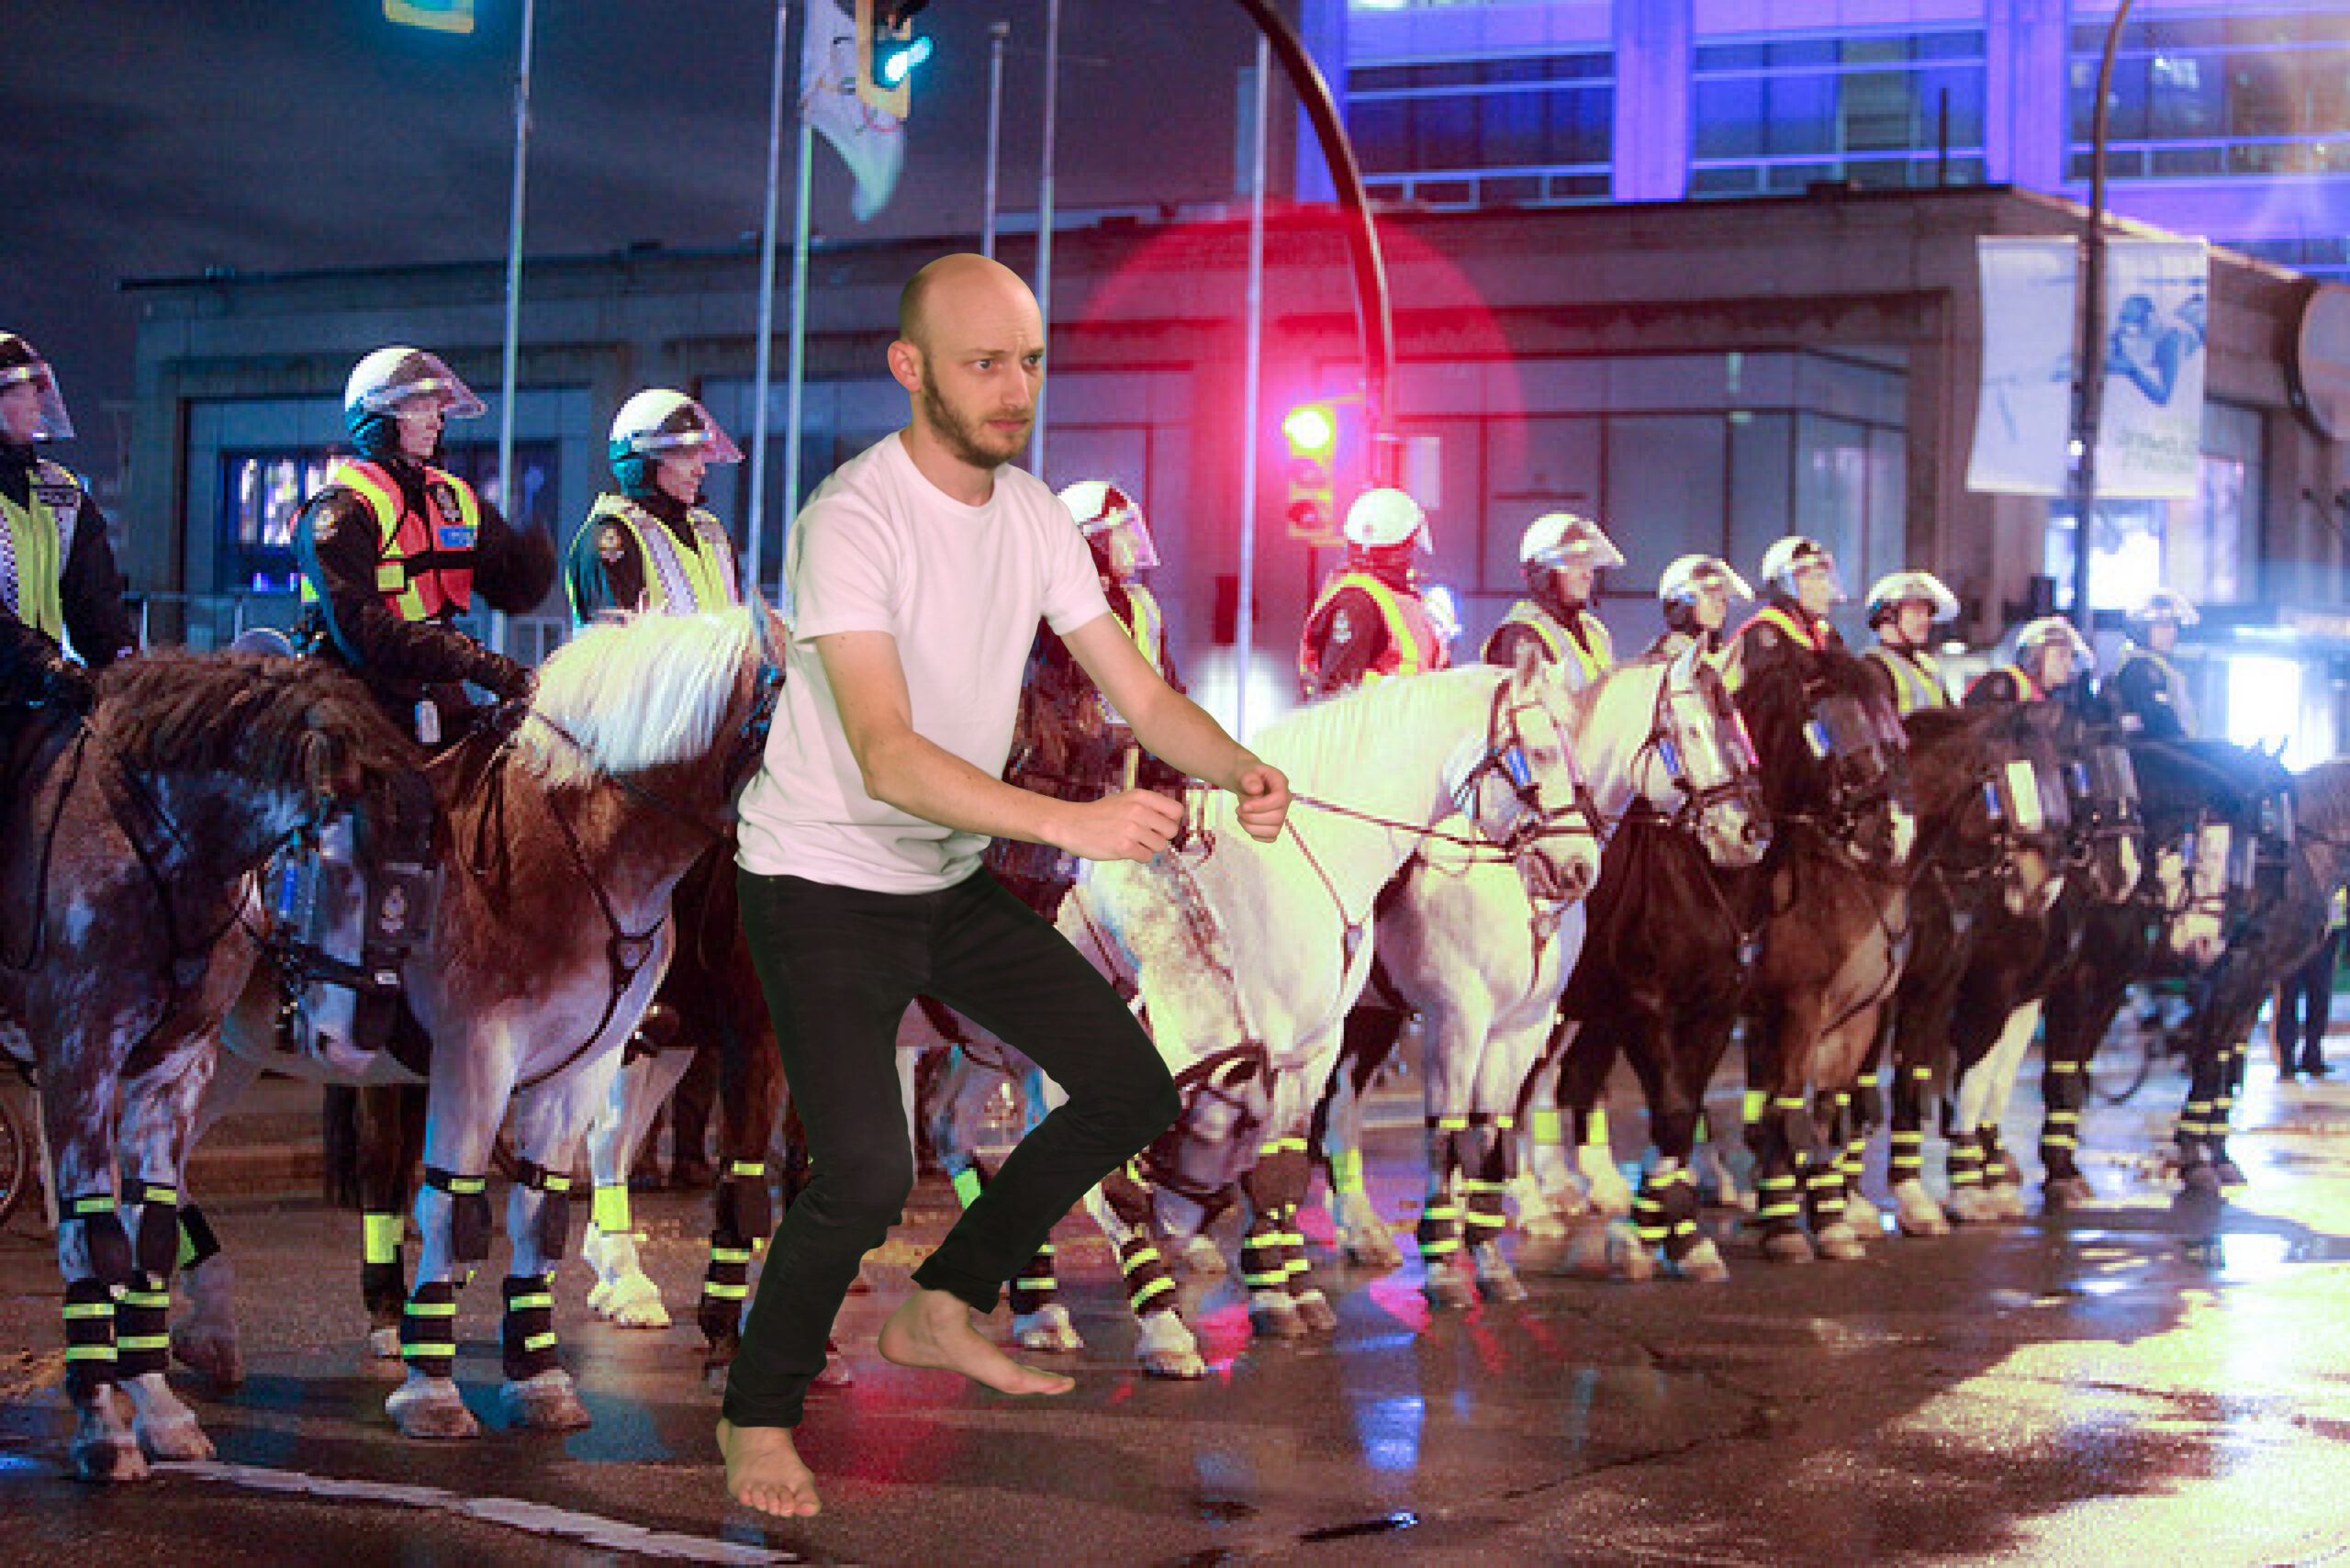 bald man pretends to ride a horse